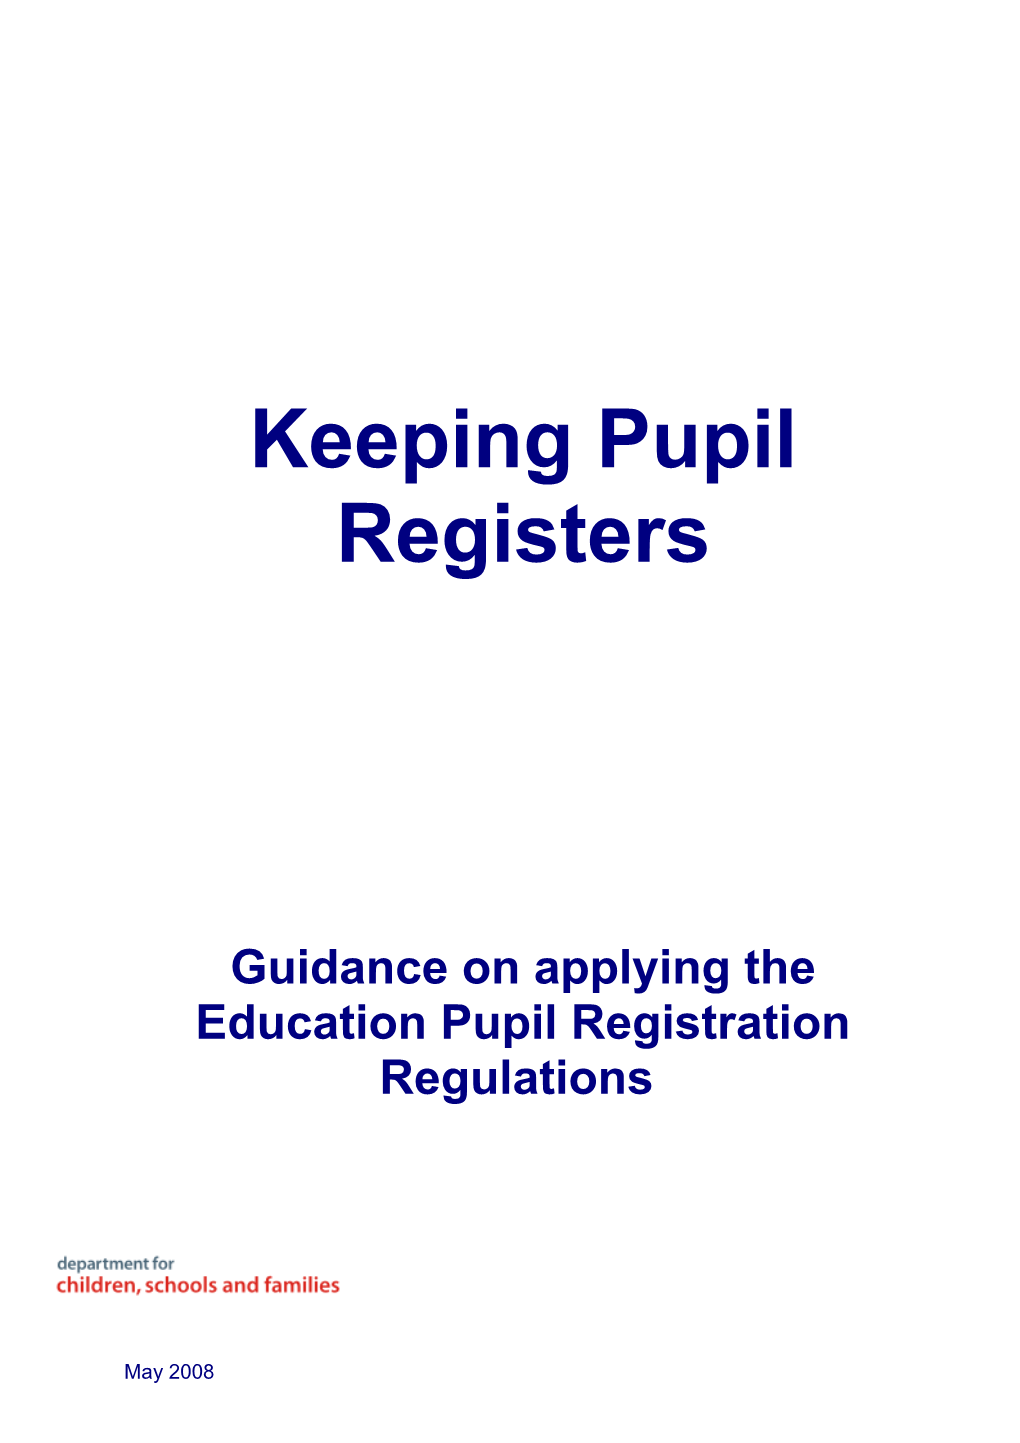 Guidance on New Pupil Registration Regulations